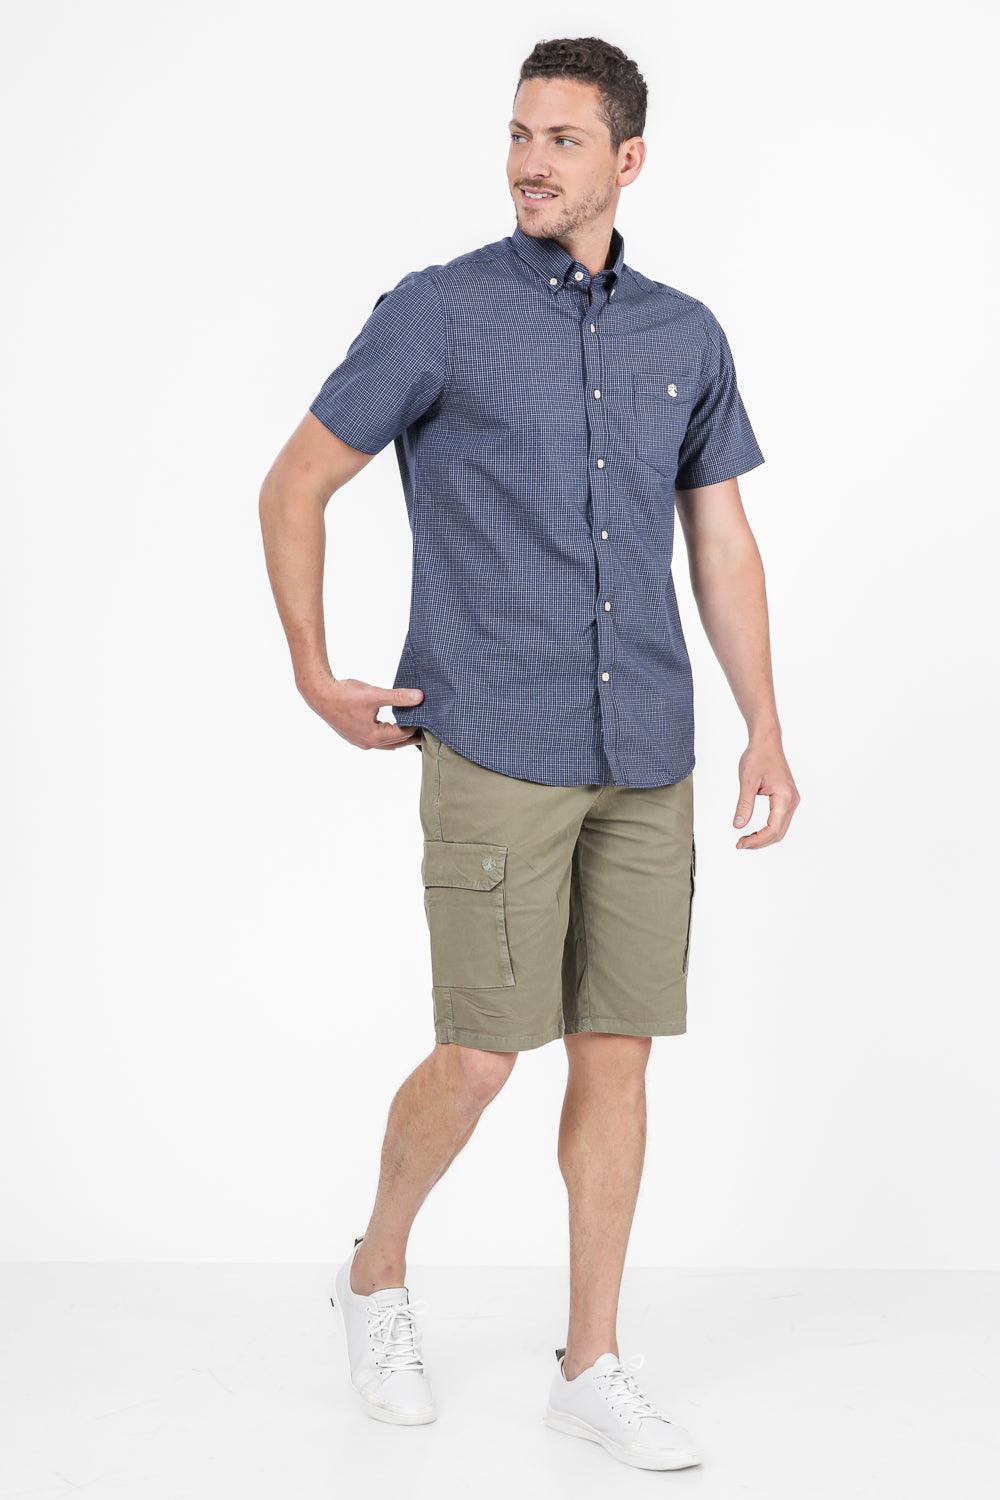 SCORCHER - חולצה מכופתרת קצרה בצבע נייבי - MASHBIR//365